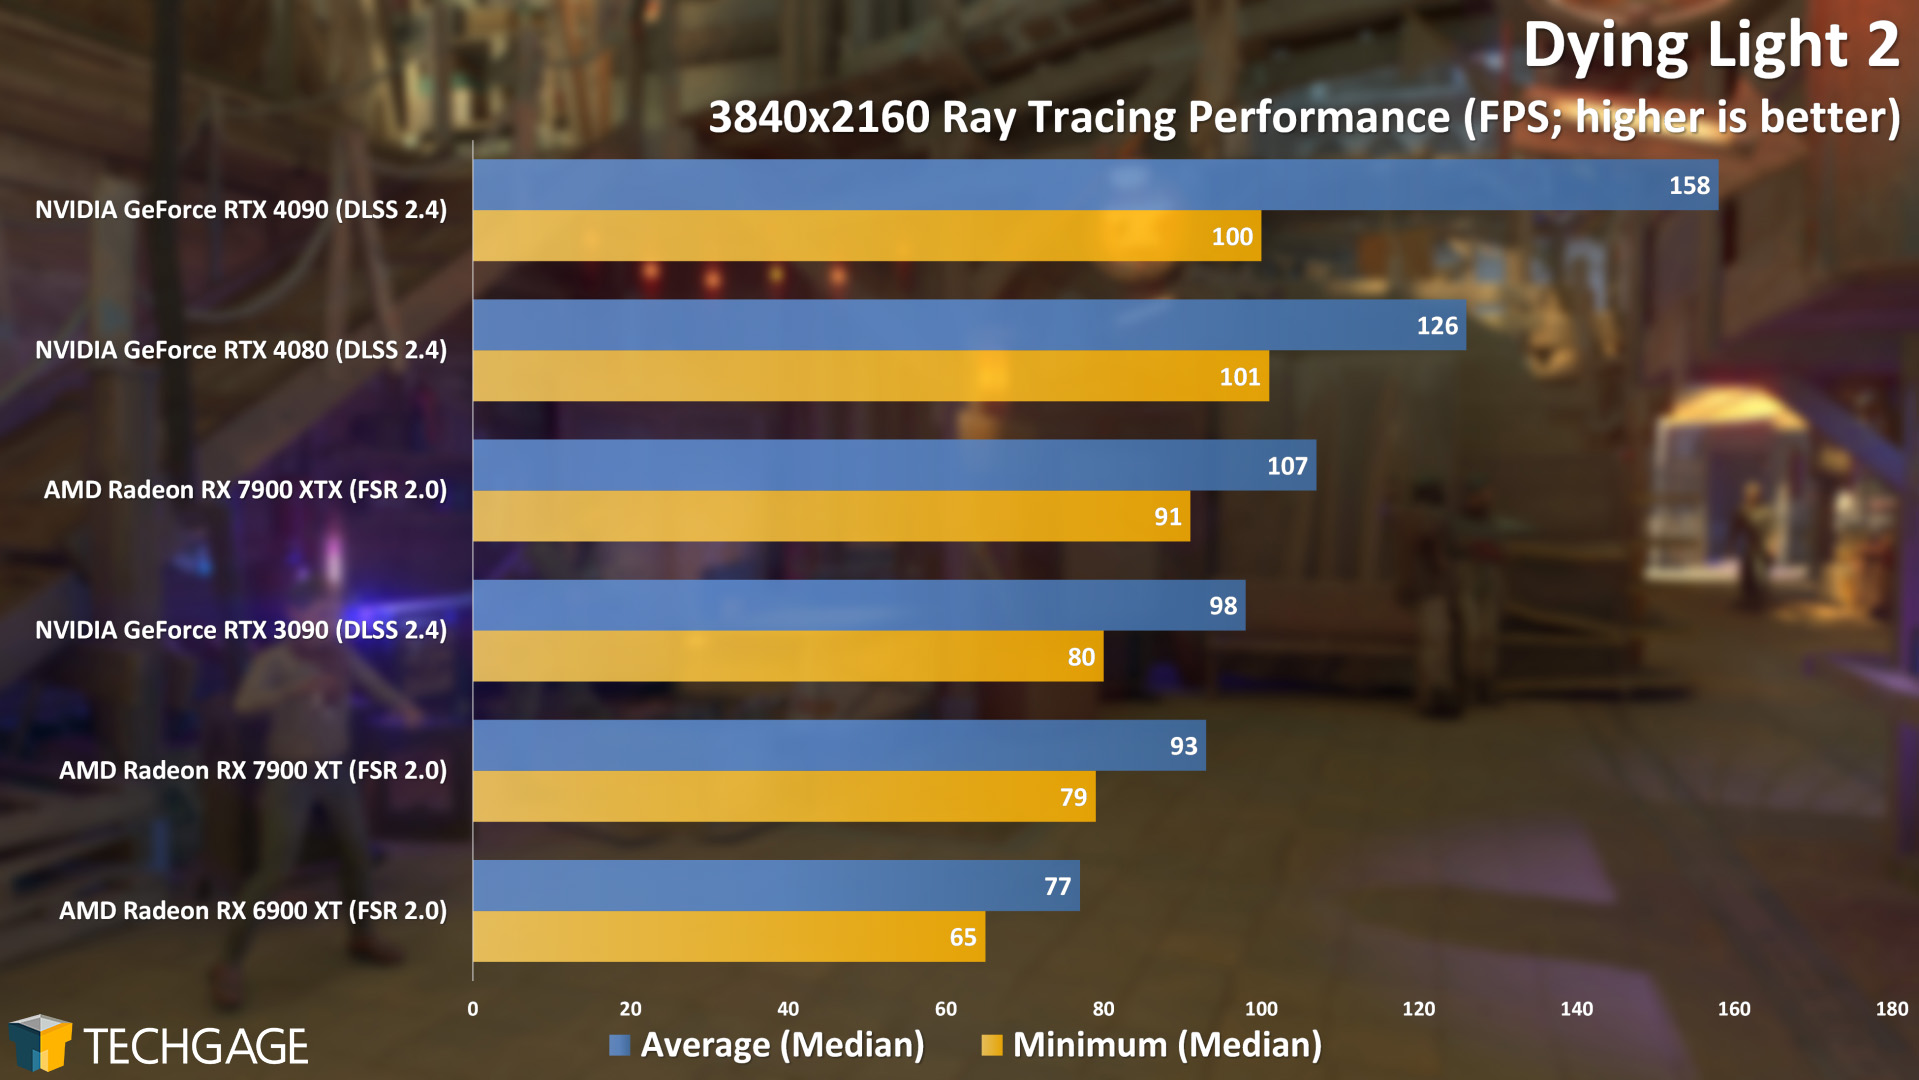 Dying Light 2 4K Ray Tracing Performance (AMD Radeon RX 7900 XT and XTX)